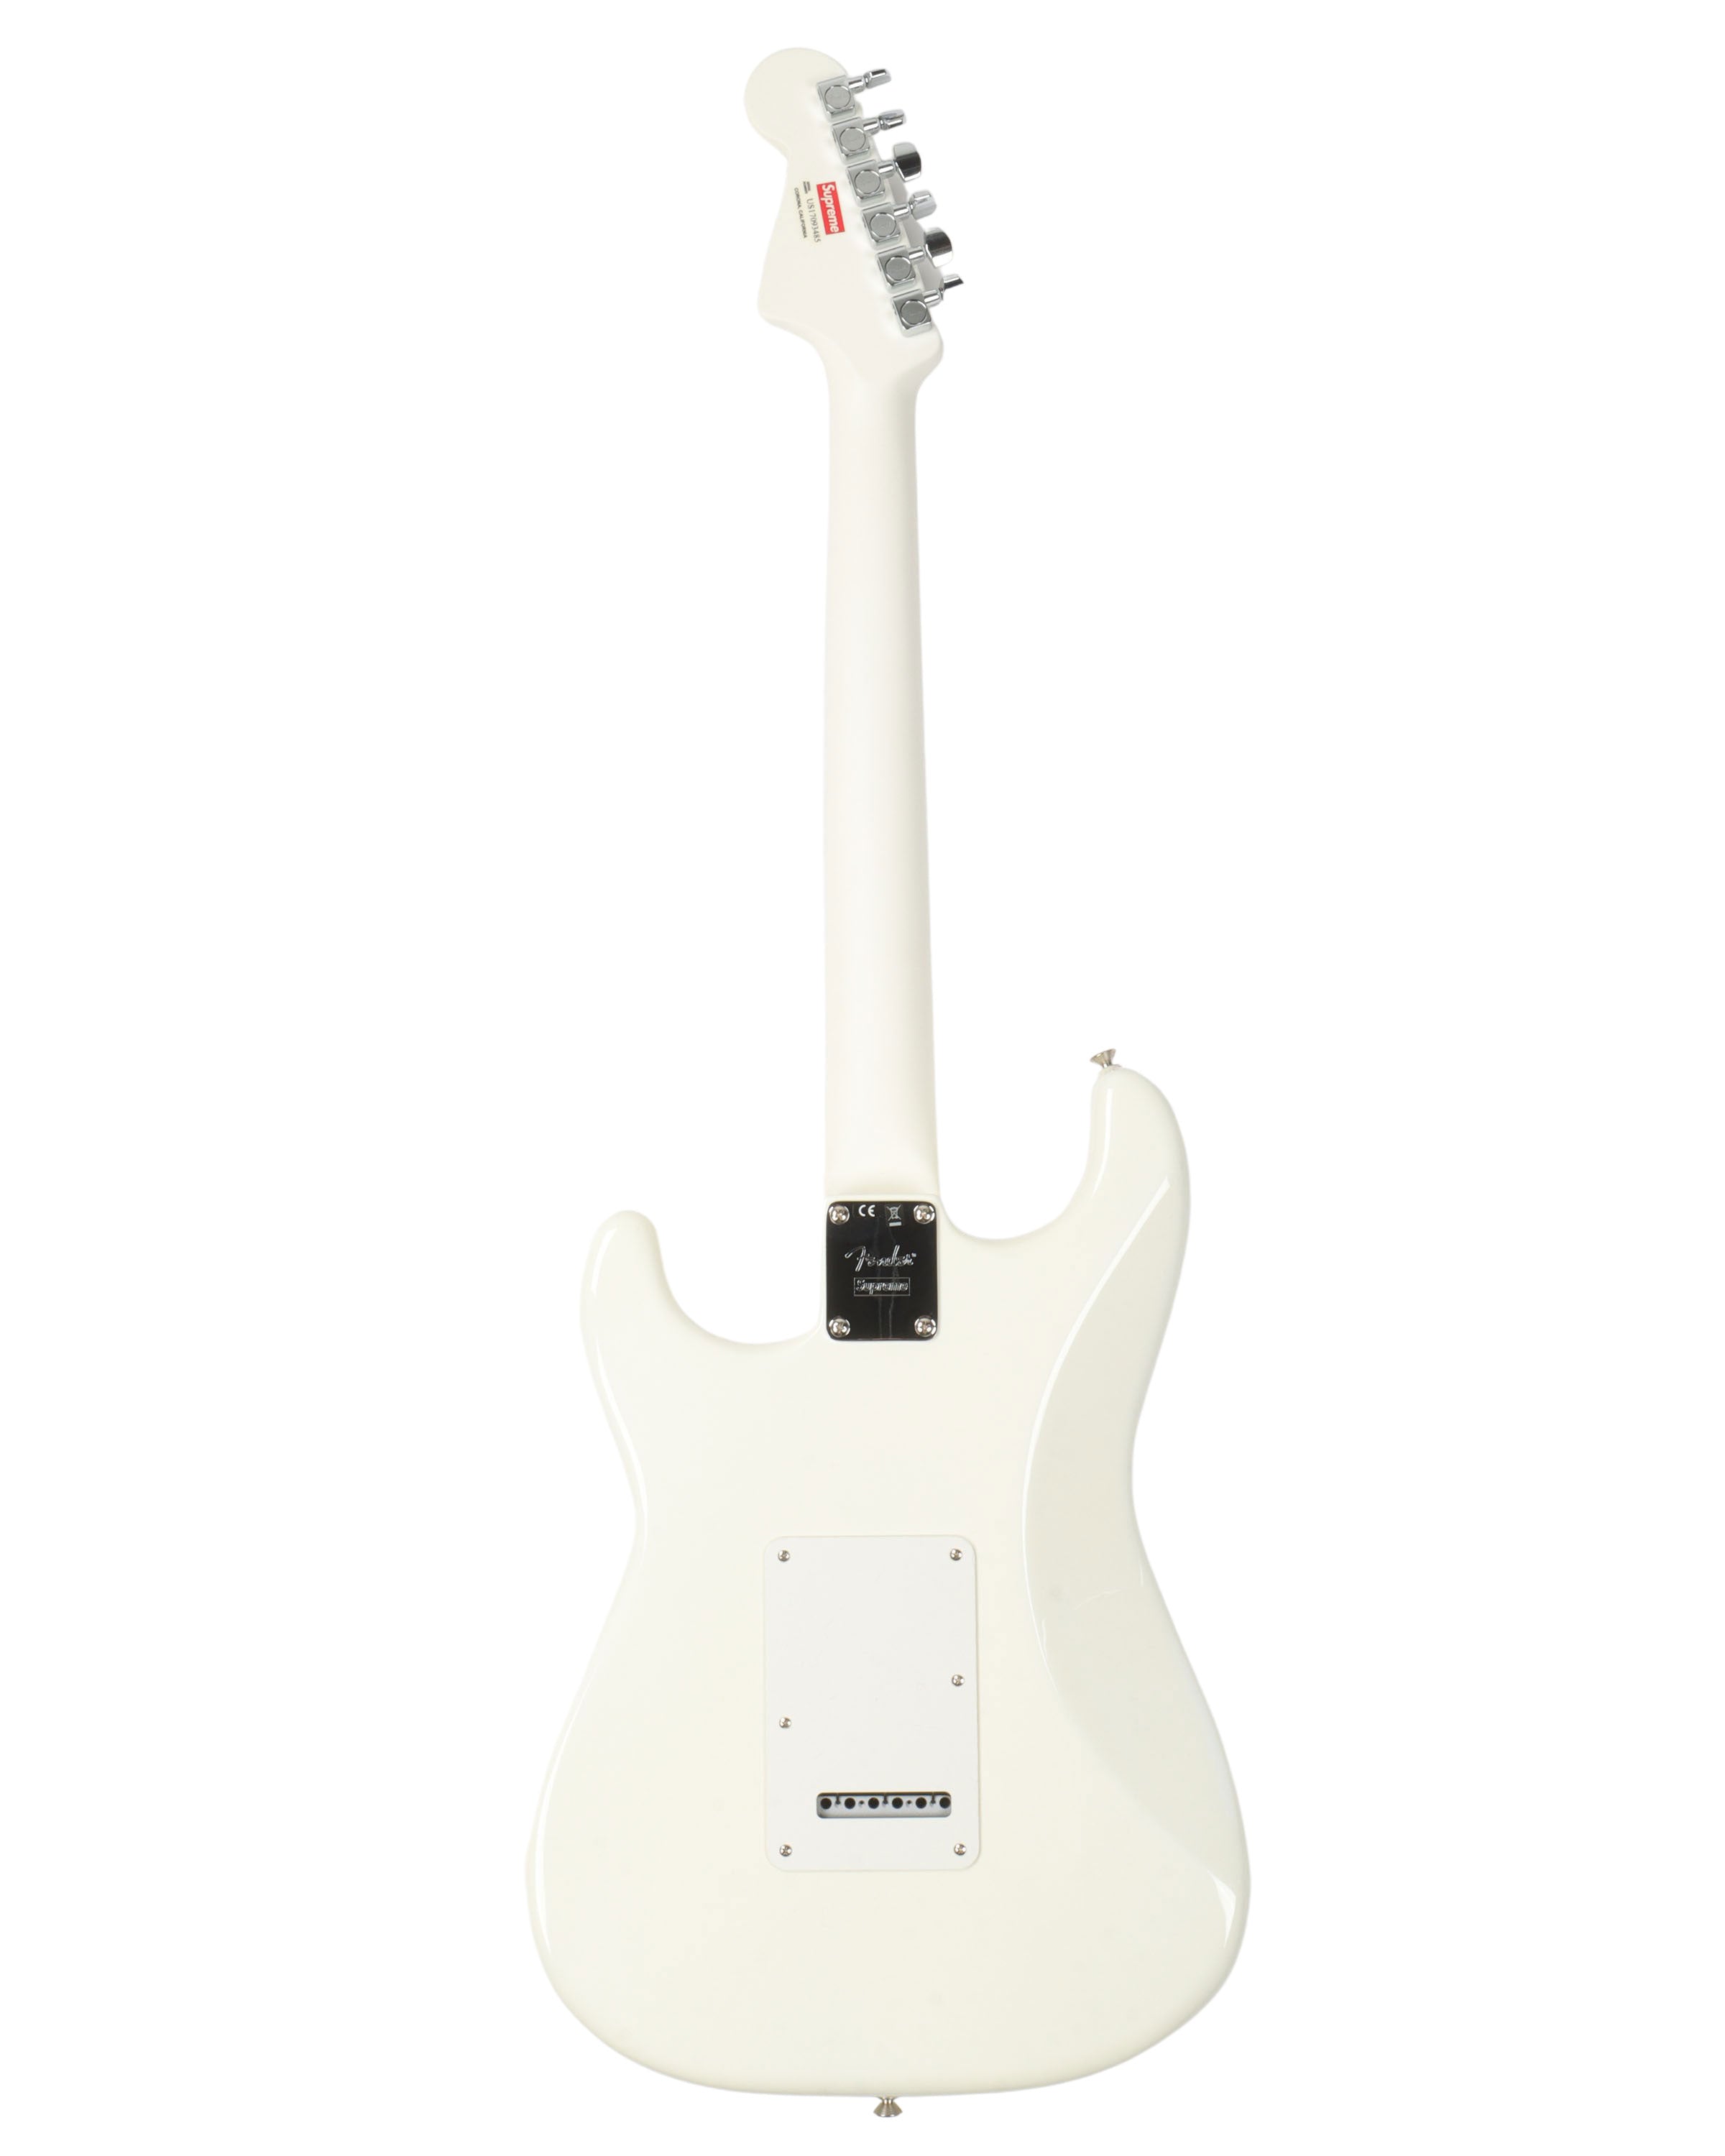 FW17 Fender Stratocaster Guitar w/ Case